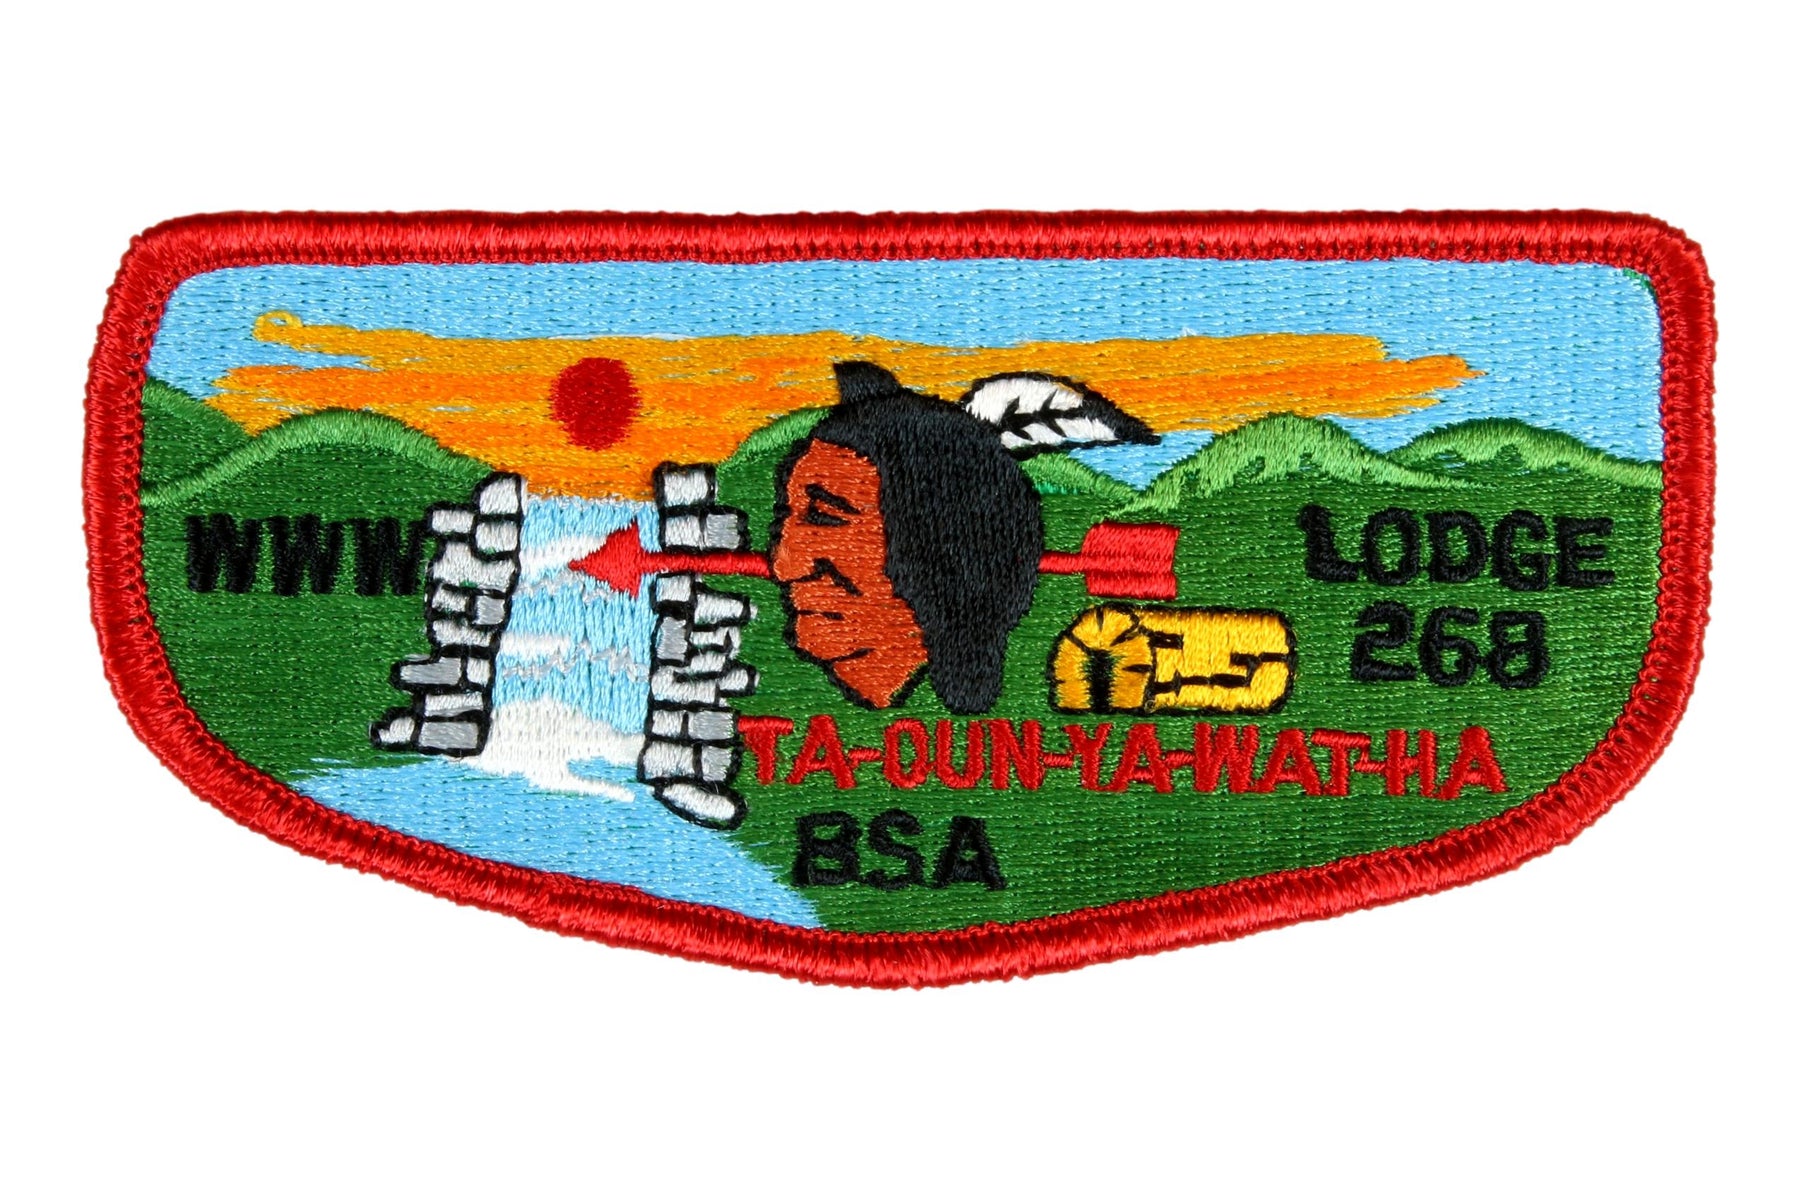 Lodge 268 Ta-Oun-Ya-Wat-Ha Flap S-14